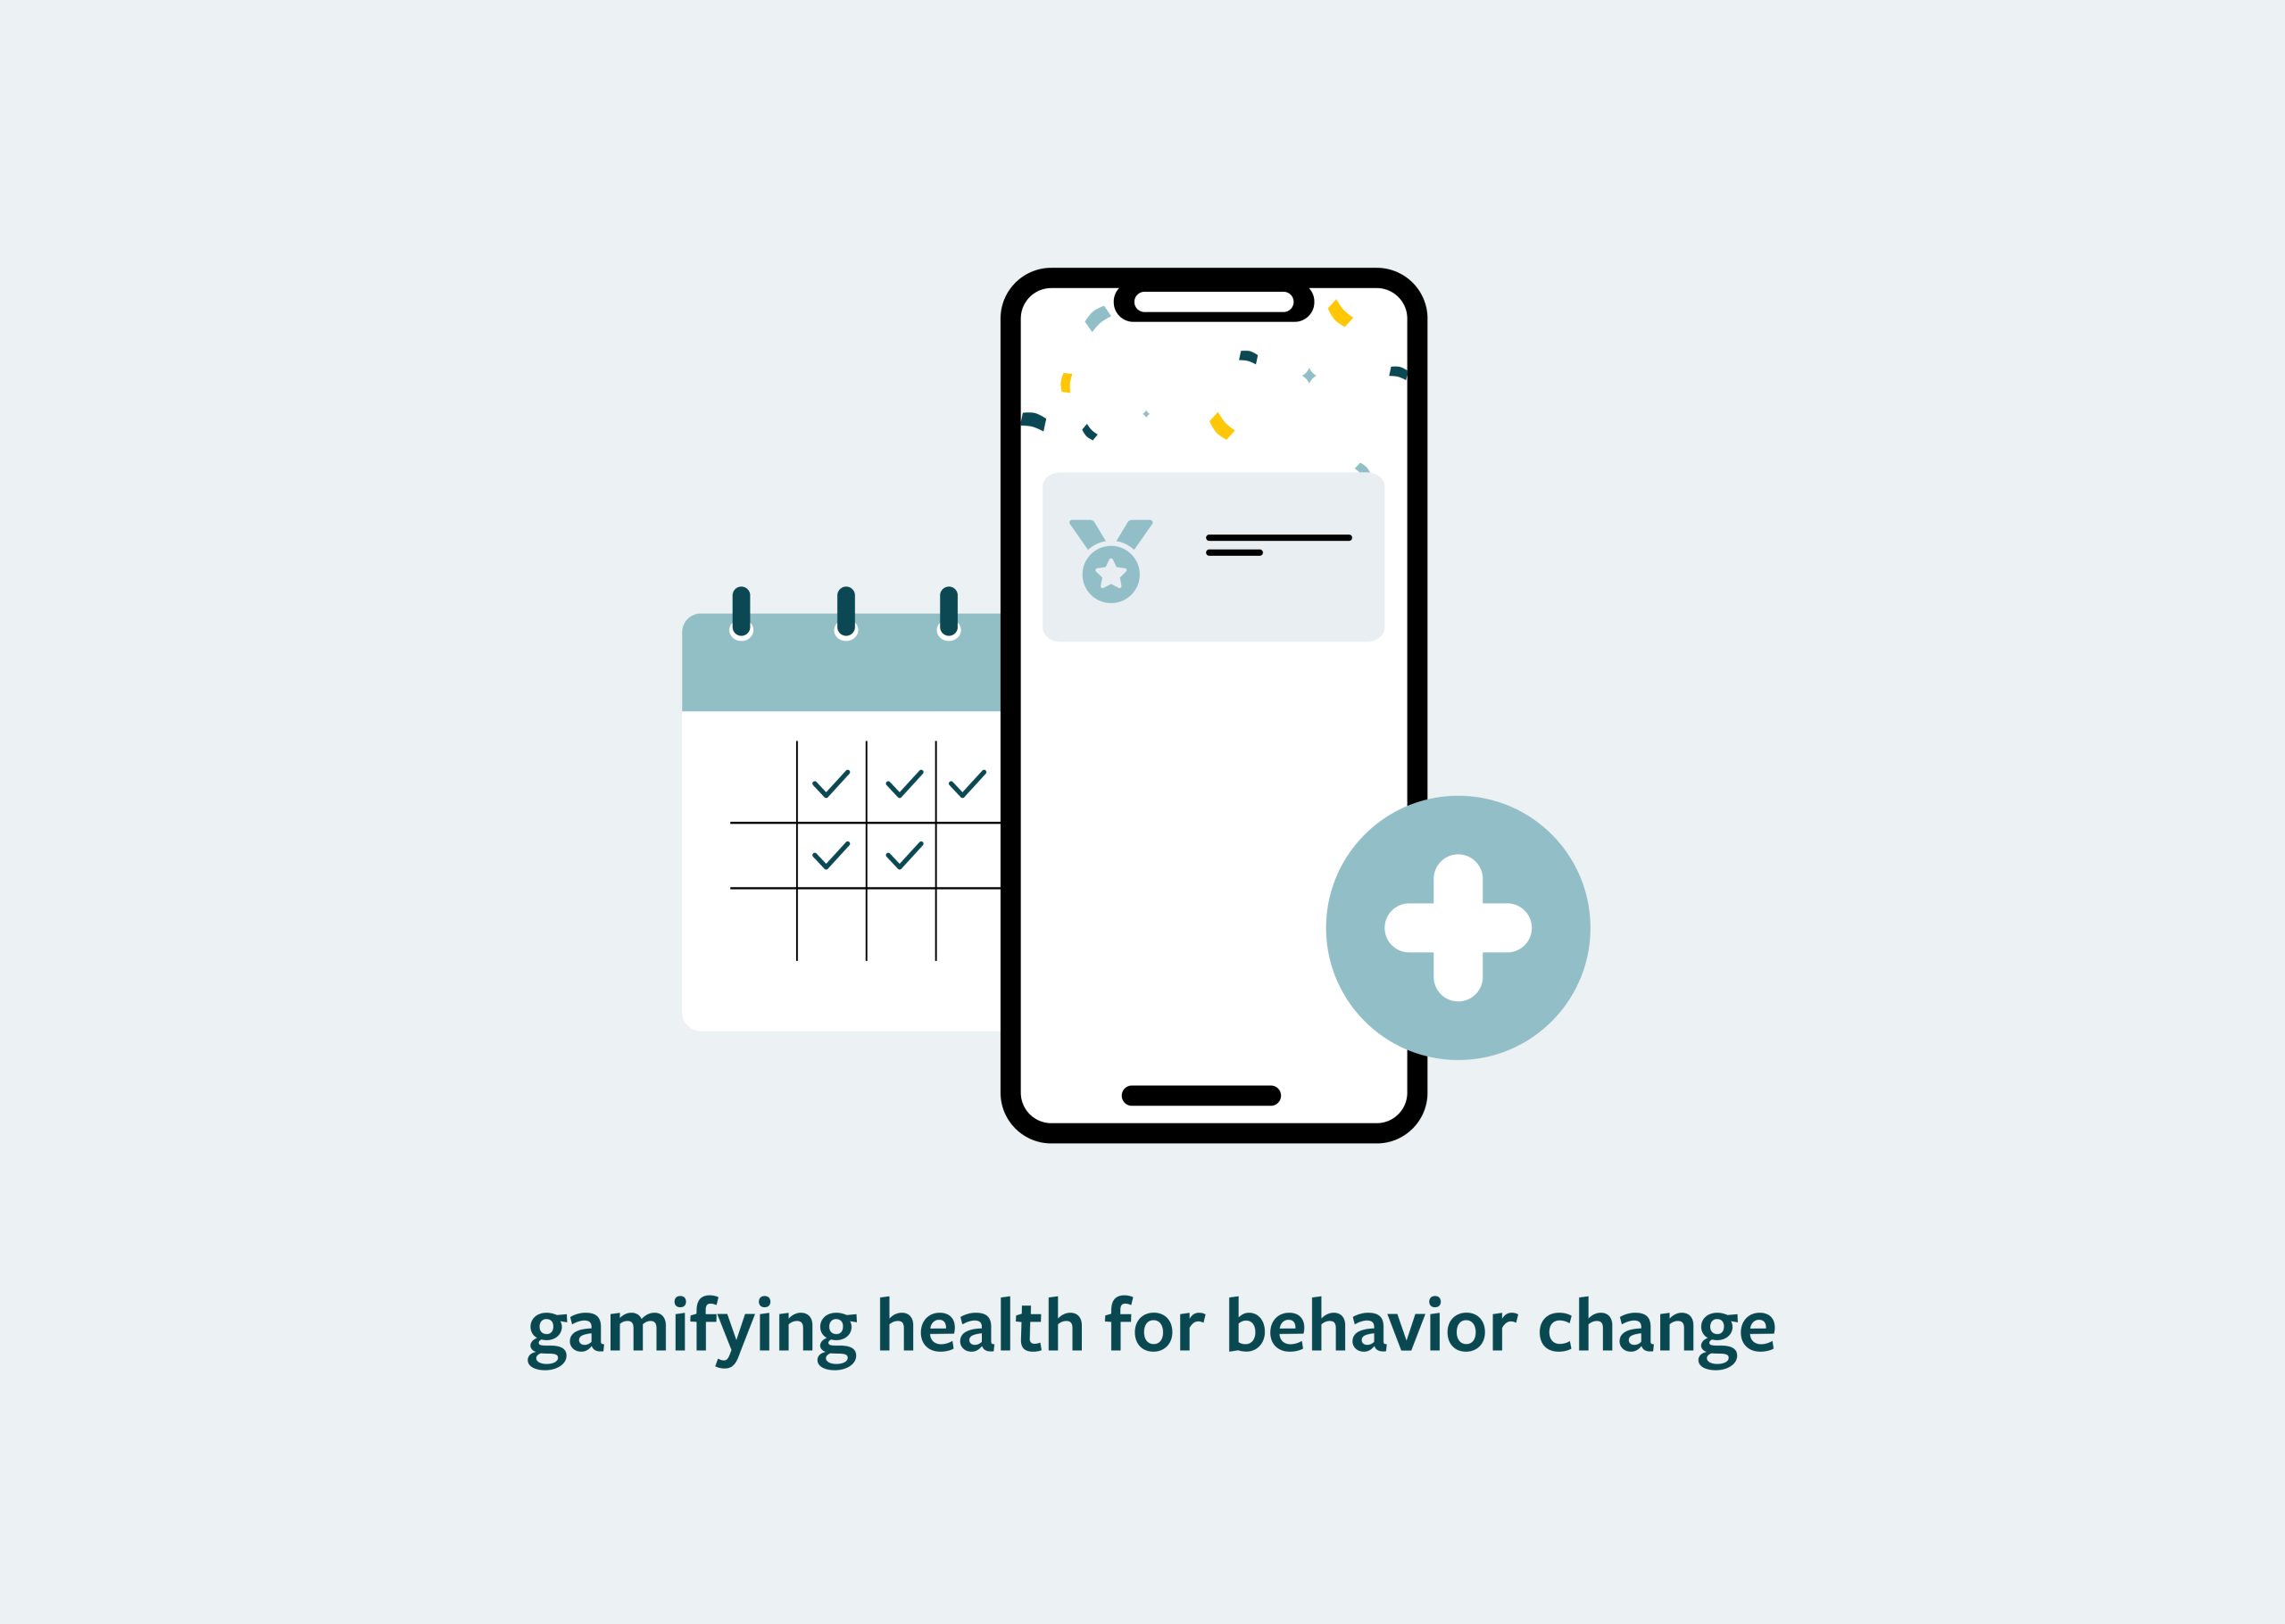 gamification in behavior change